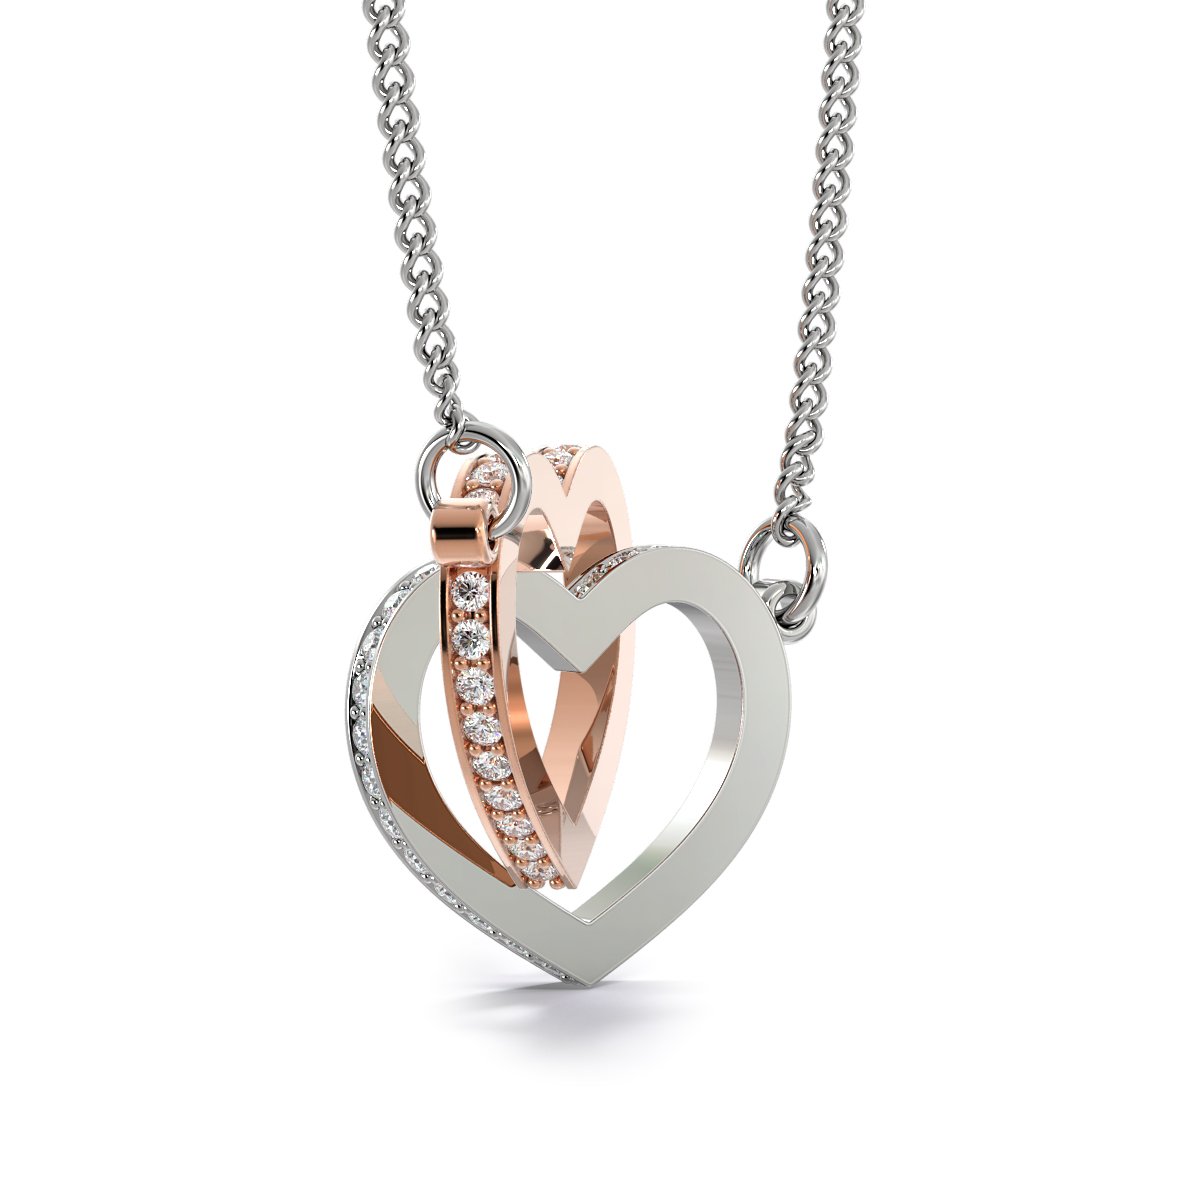 ShineOn Fulfillment Jewelry Interlocking Heart Insert Template To My Wife - Interlocked Hearts - You Guide My Pathway